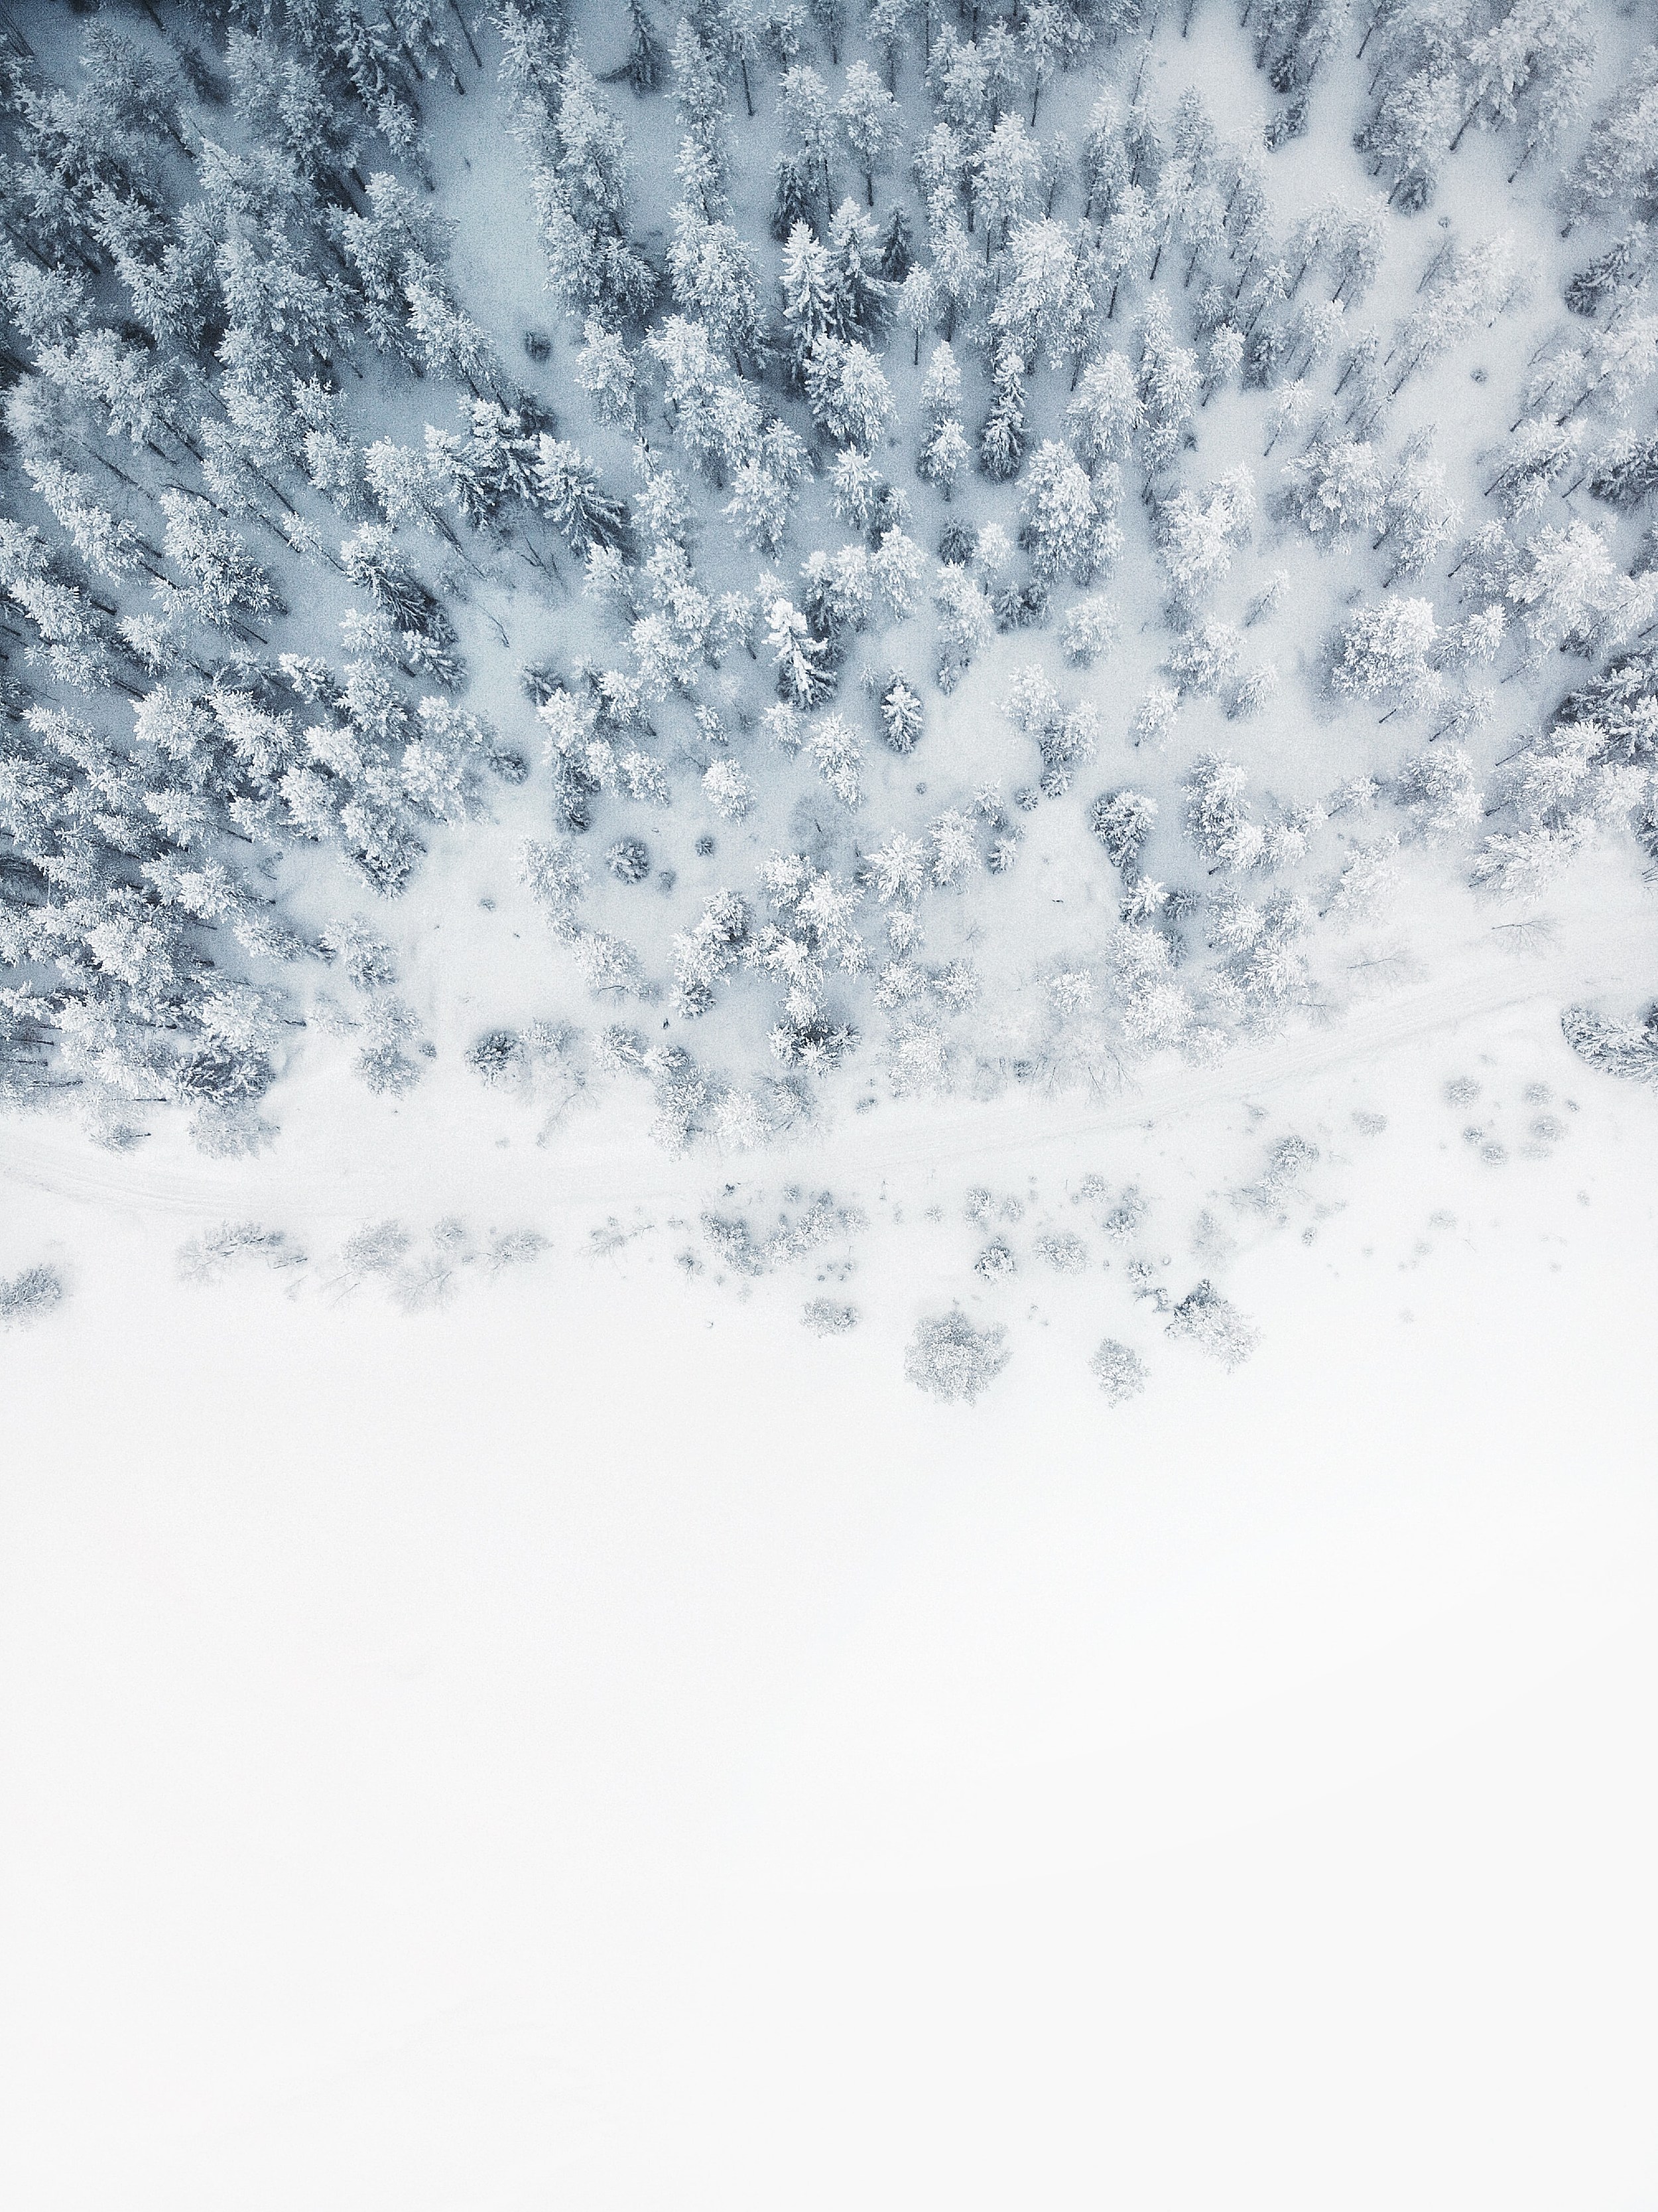 Snow Emergency in Ilion, New York Through 01/17/2022